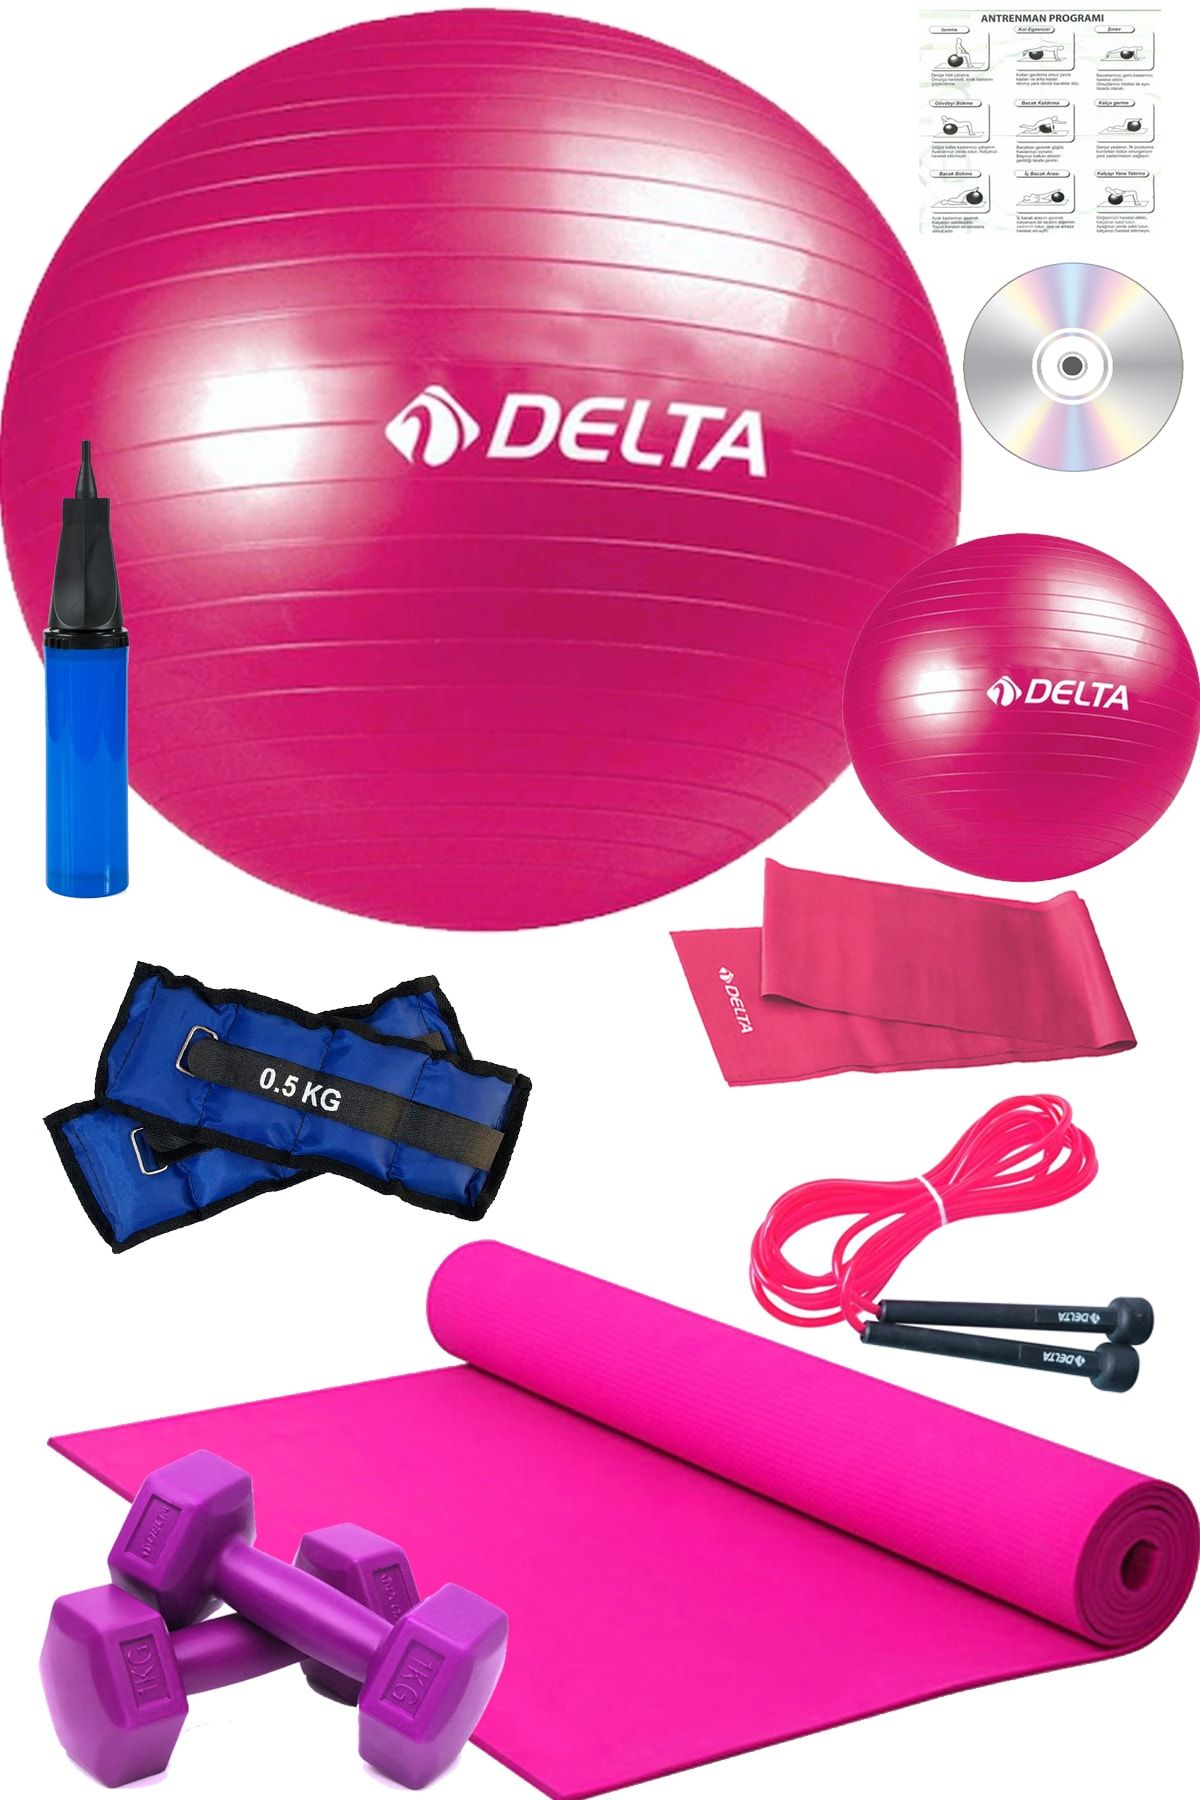 Delta 10 lu Pilates Seti Pilates Matı Pilates Topu Pilates Lastiği 1KG Dambıl Seti Bilek Ağırlığı